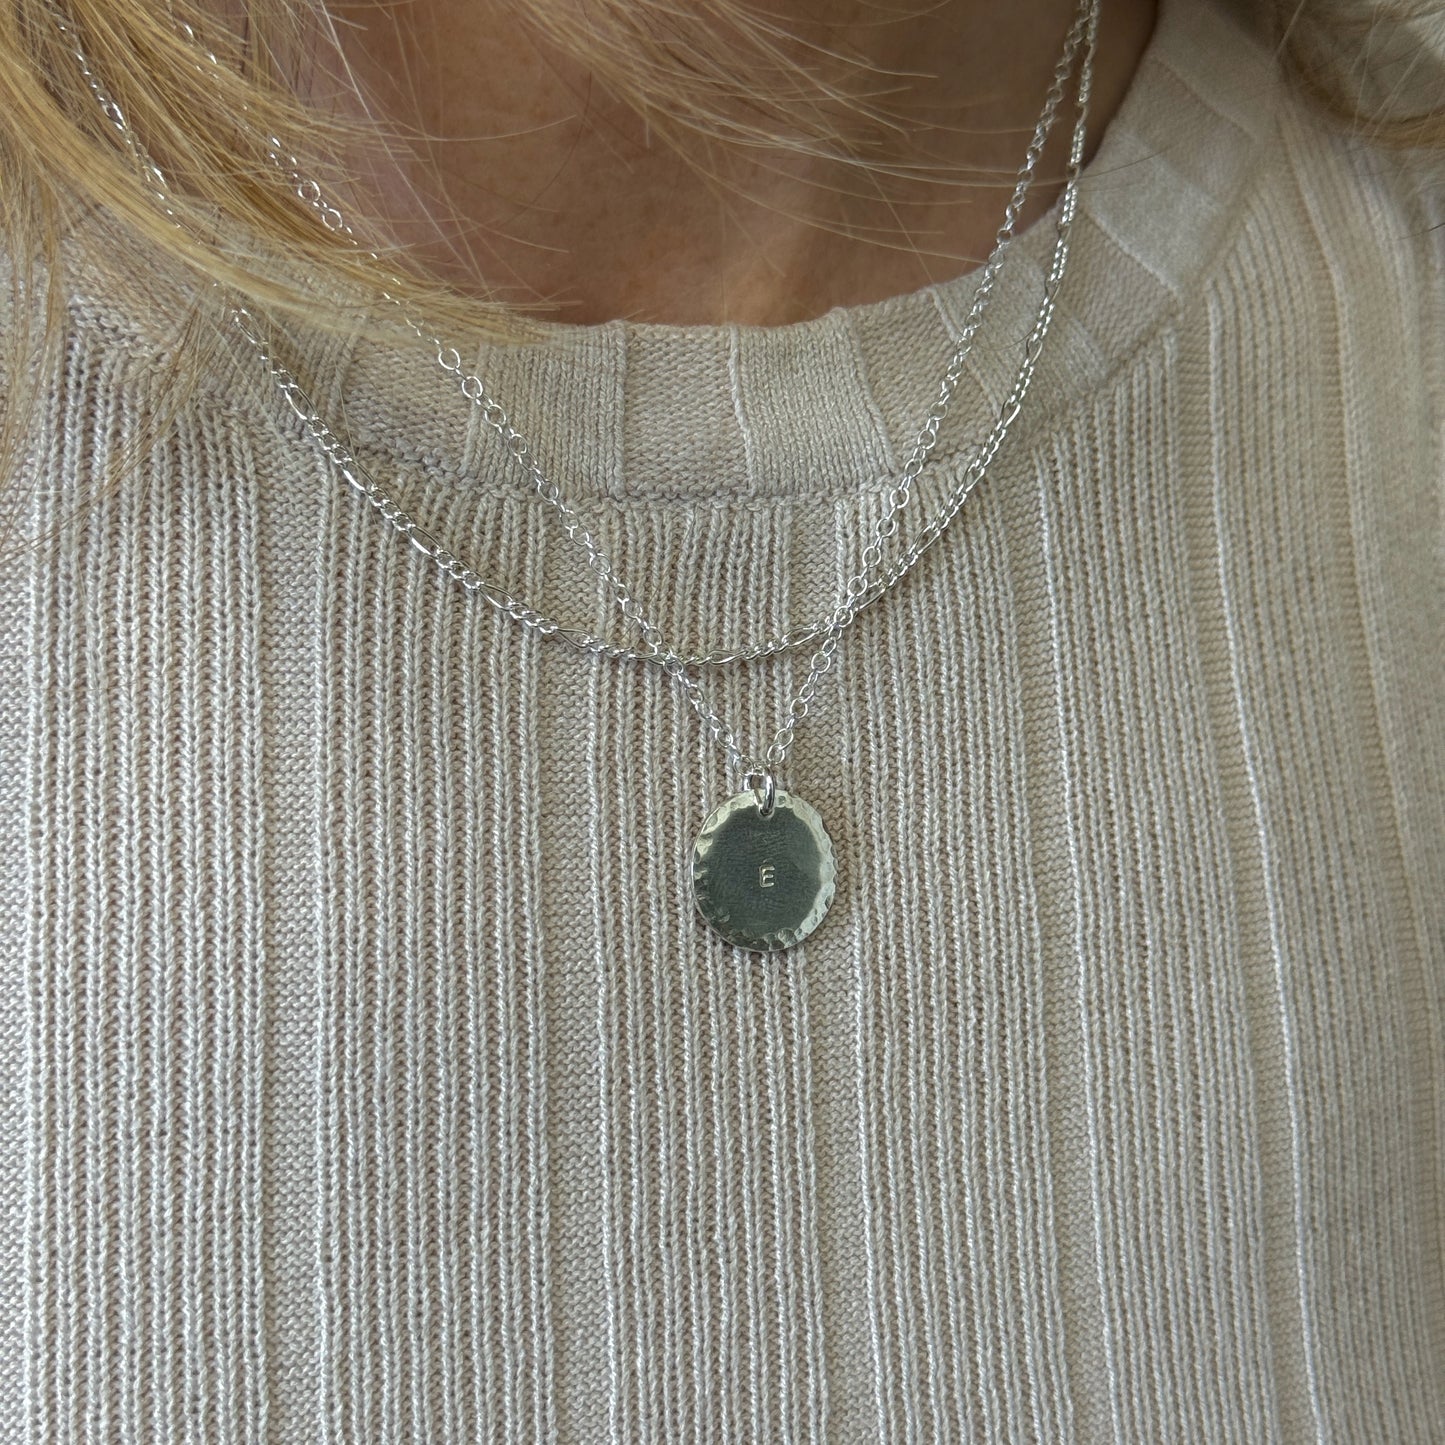 Personalised Silver Necklace - Medium